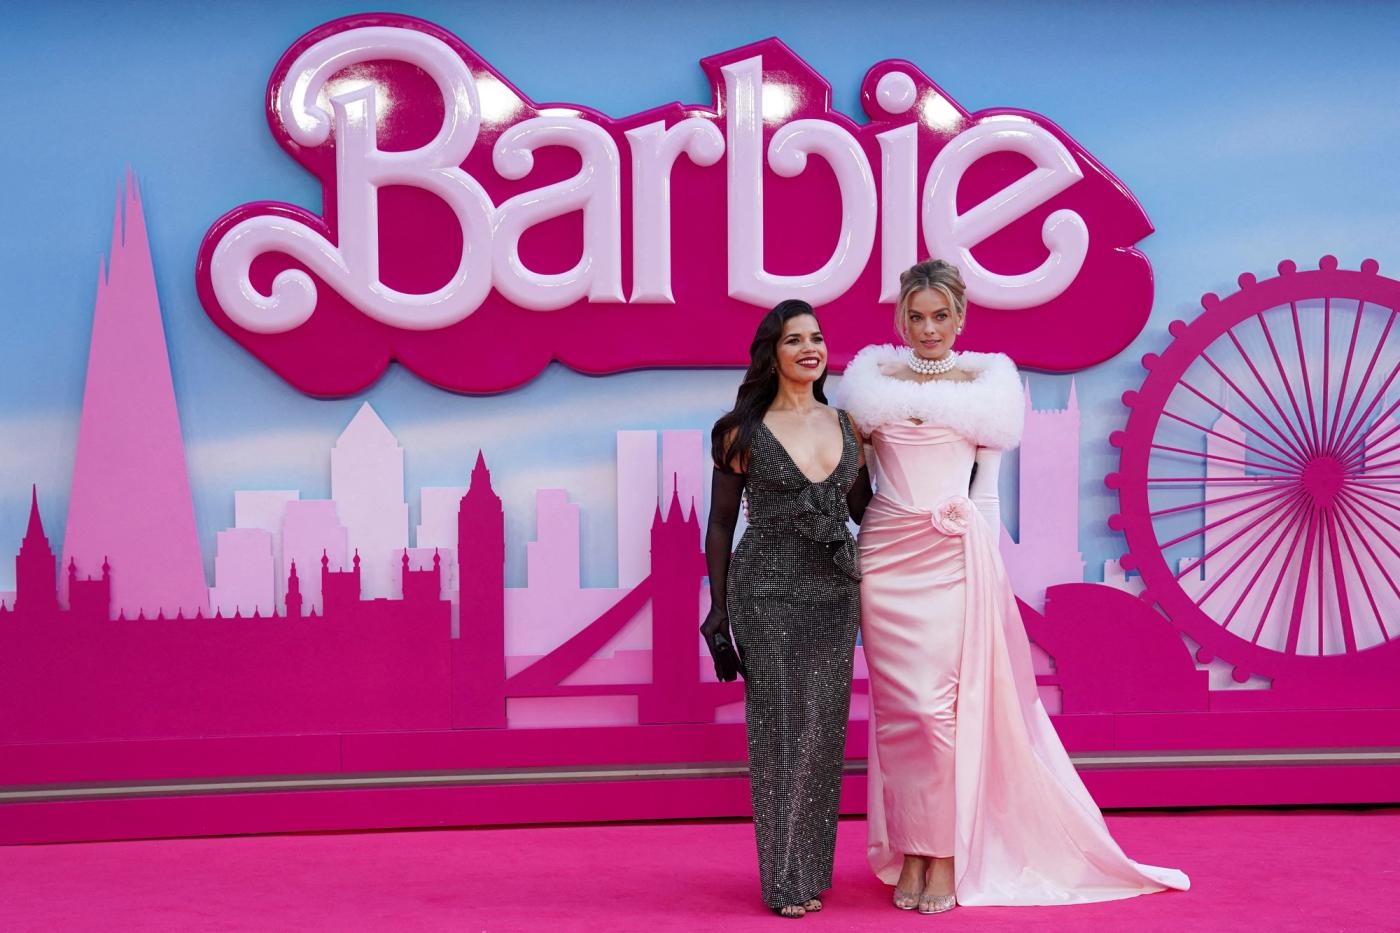 America Ferrera and Margot Robbie attend the European premiere of "Barbie" in London, Britain July 12, 2023.